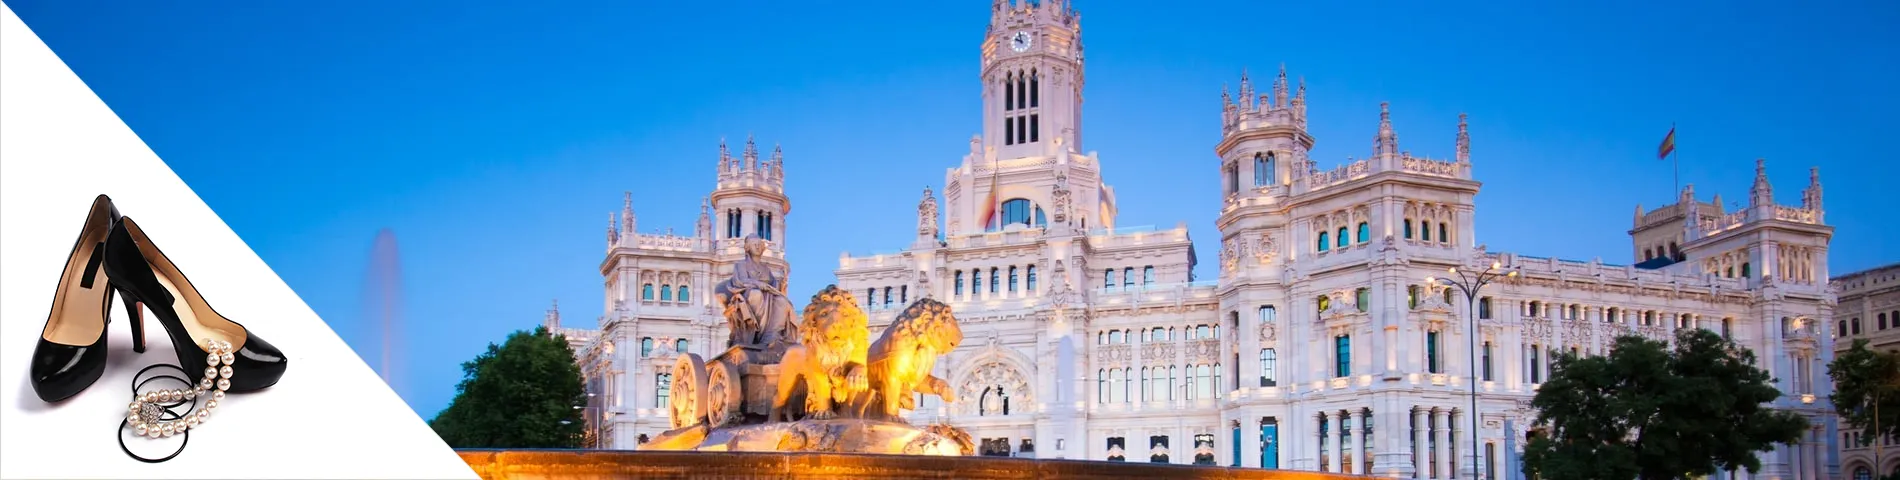 Madrid - Spanish for Fashion